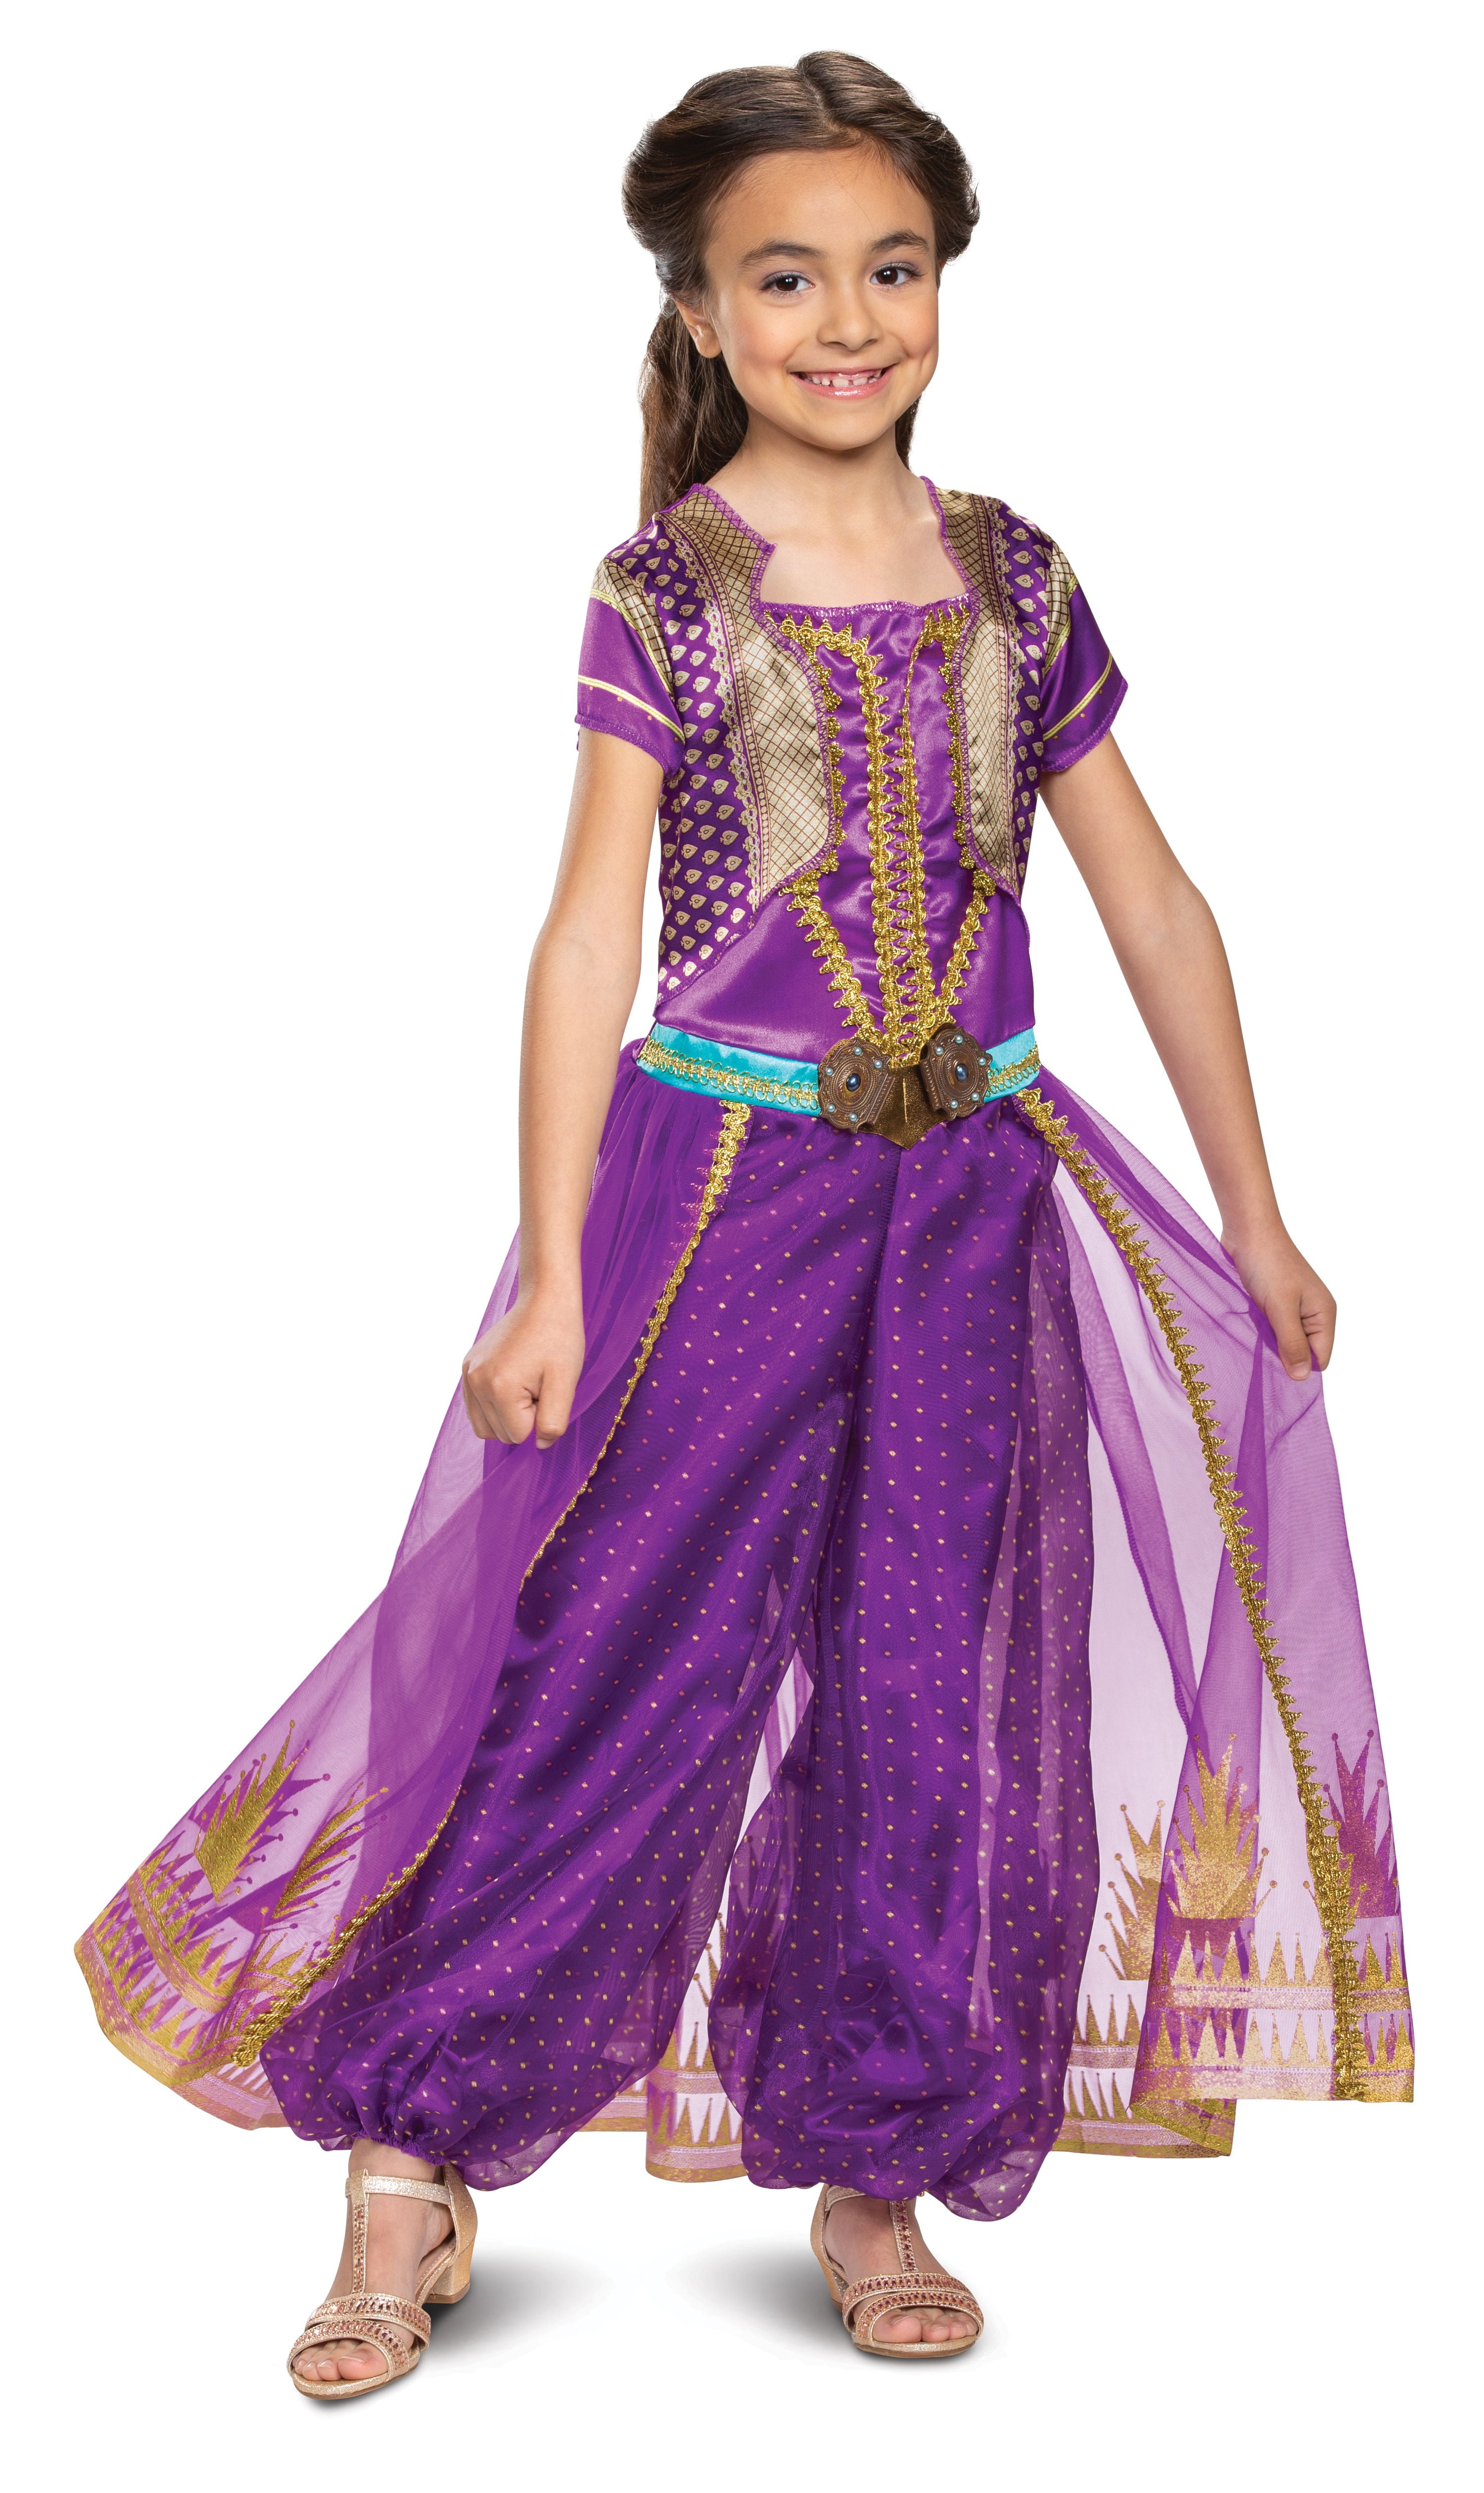  Jasmine  Purple Deluxe Child Costume  Walmart com 